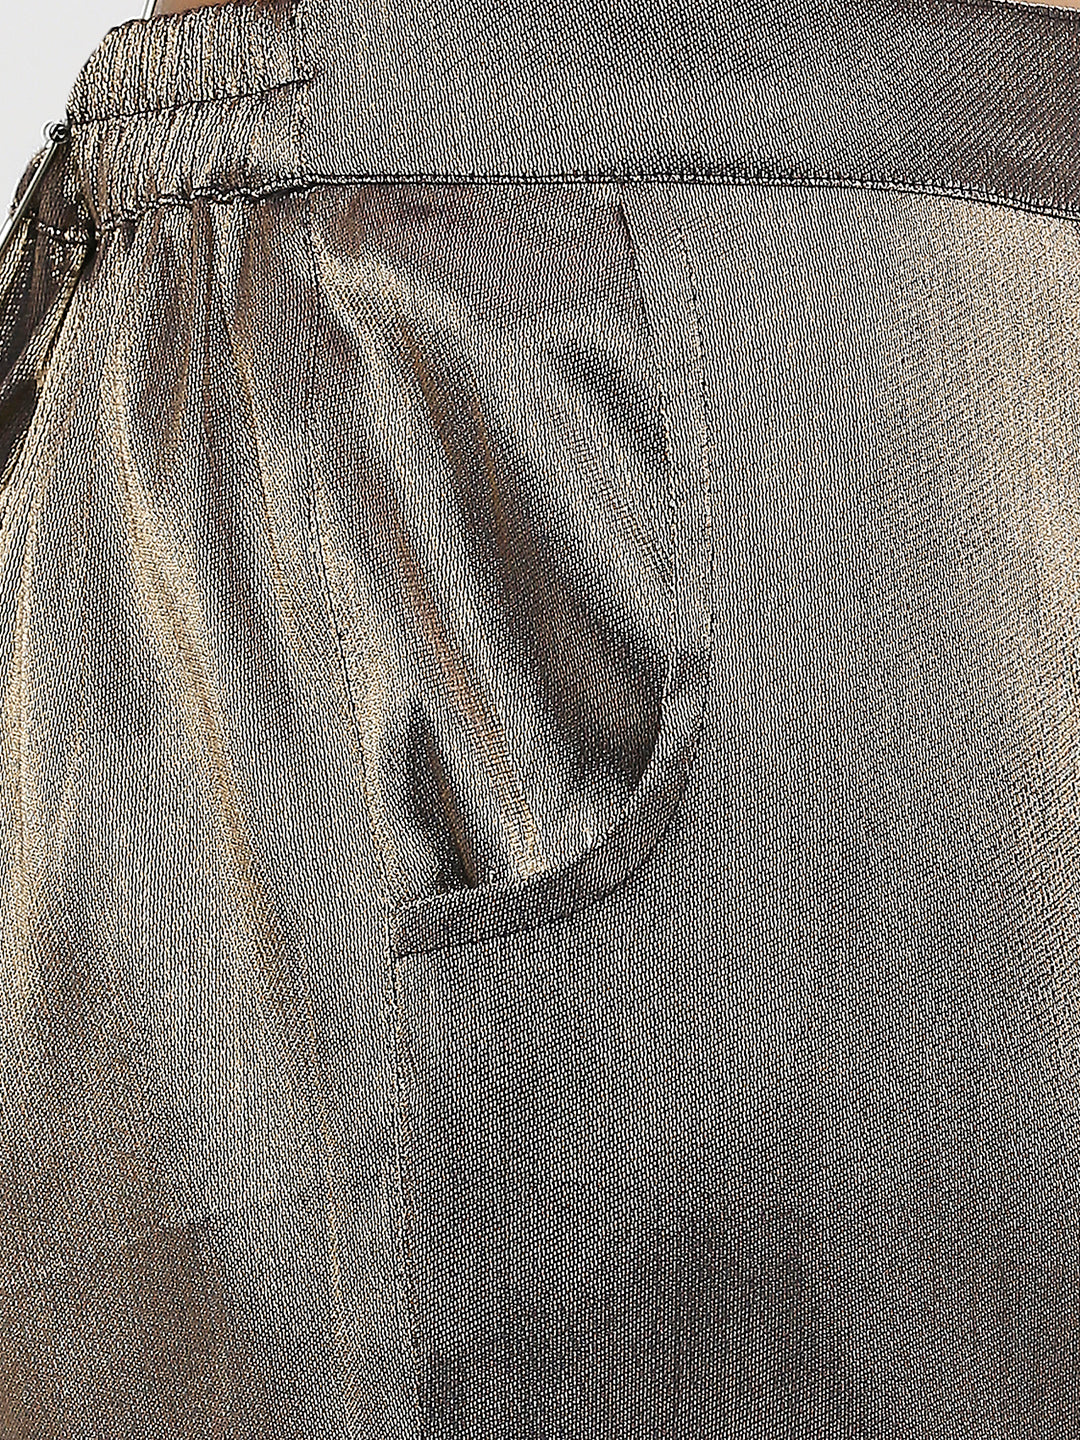 Navy Gold Plain Weave Brocade Pant